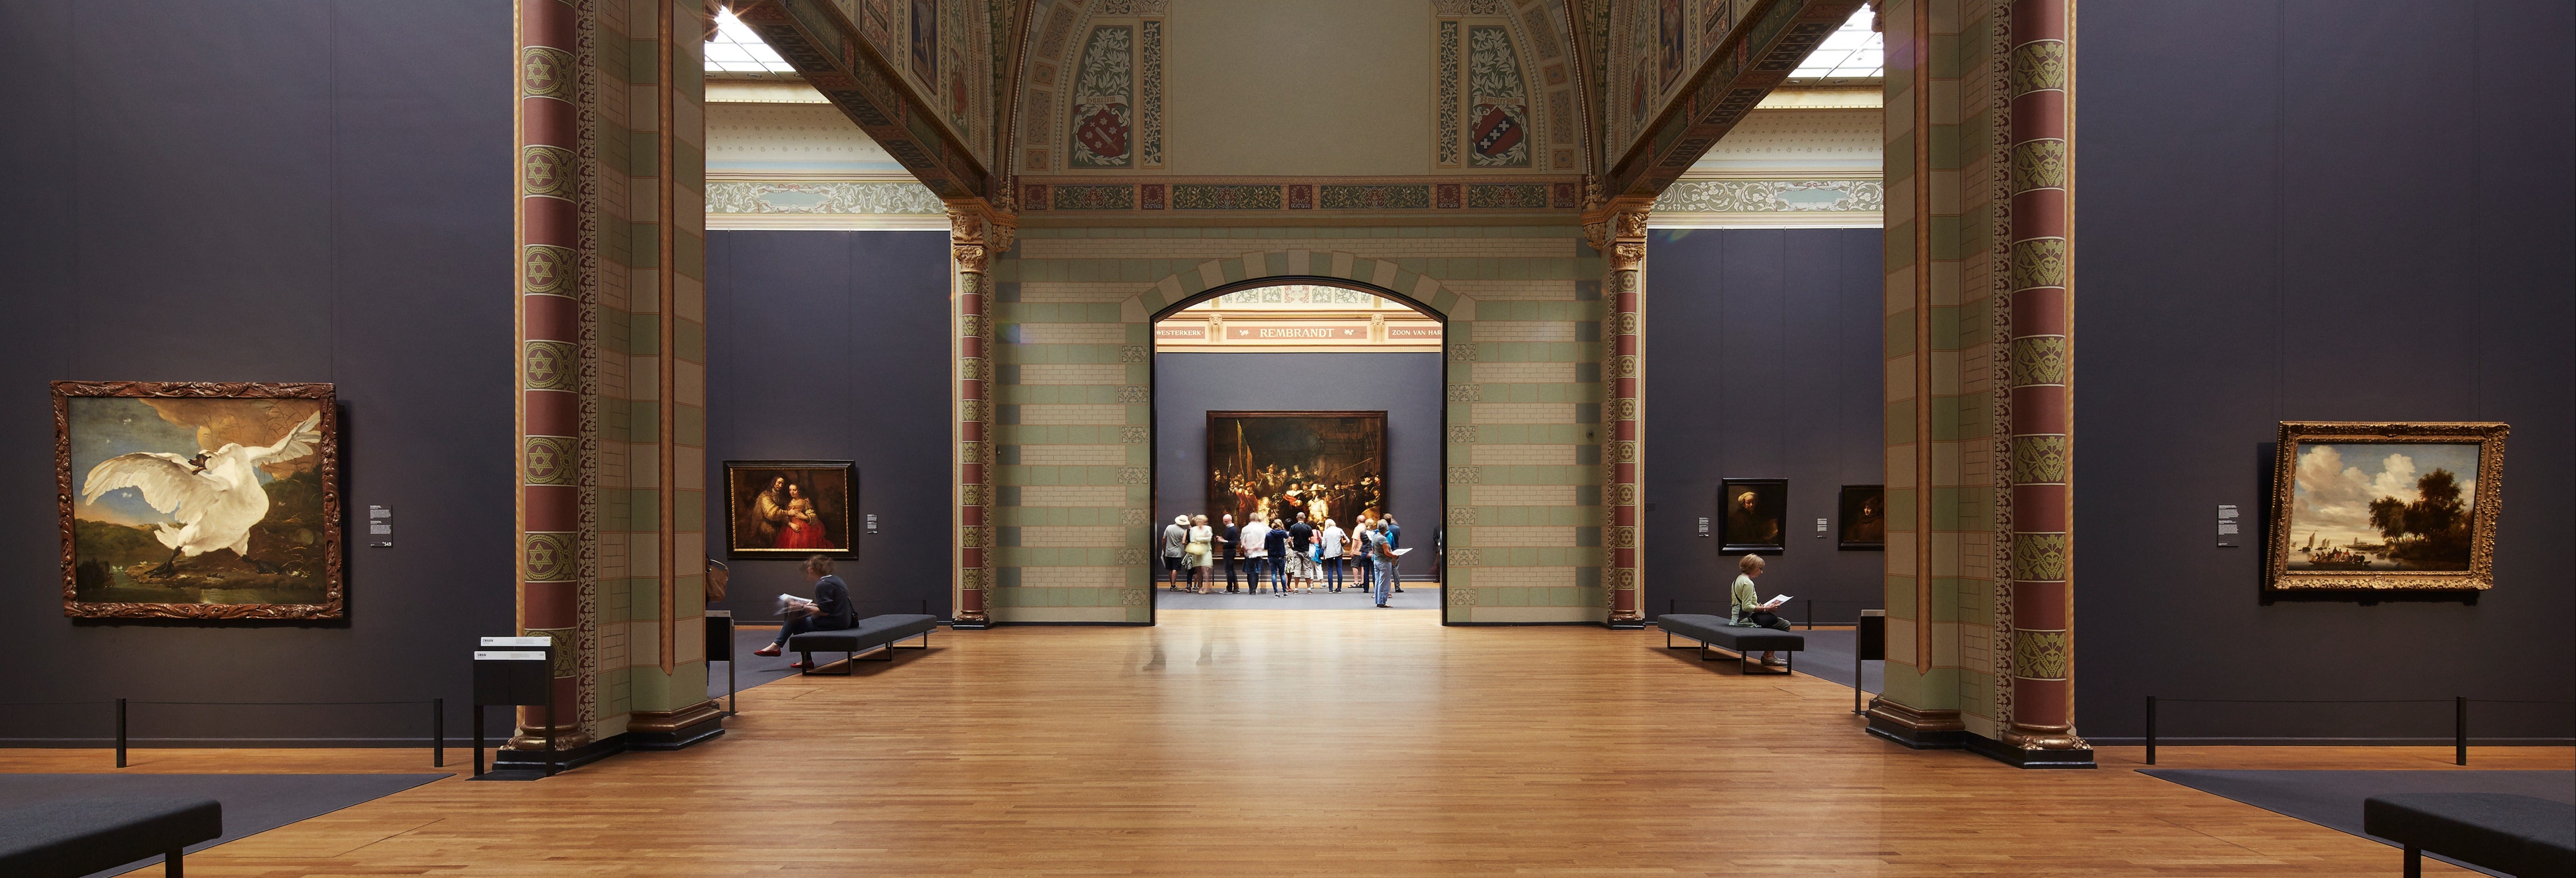 Visita guiada pelo Rijksmuseum